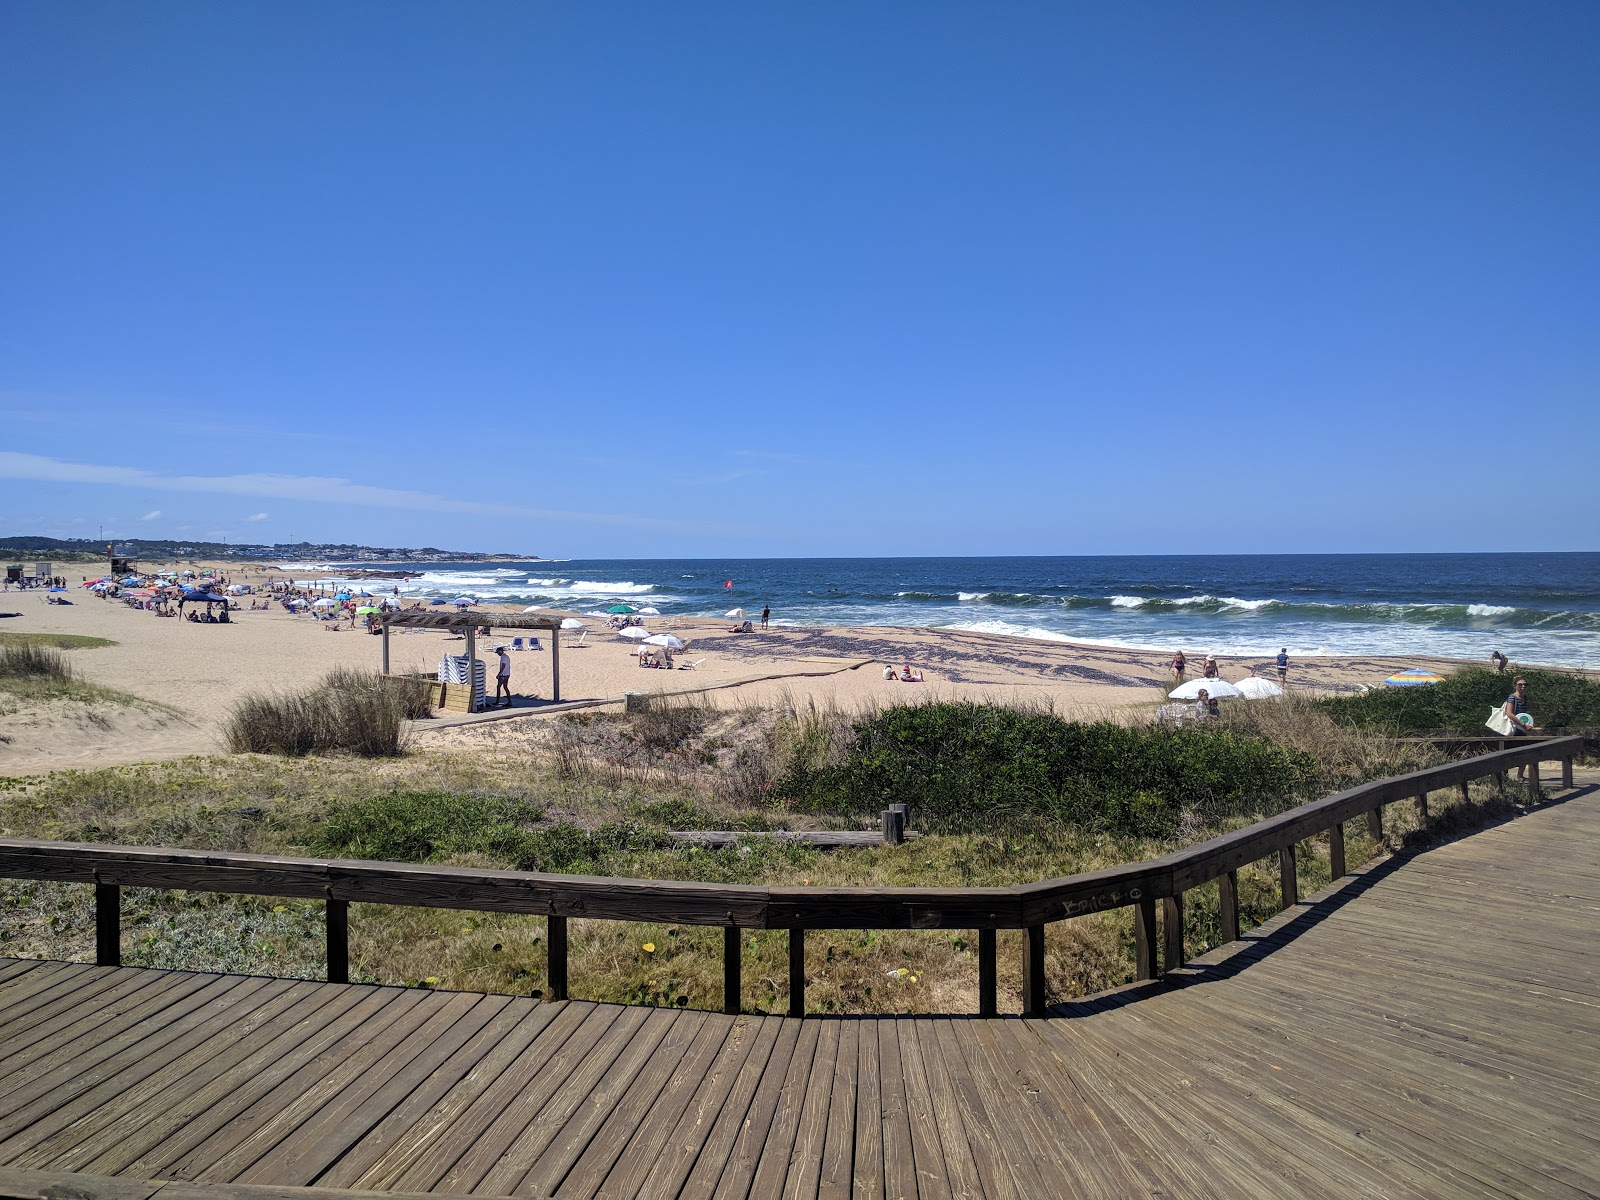 Fotografija Montoya Beach z prostorna obala